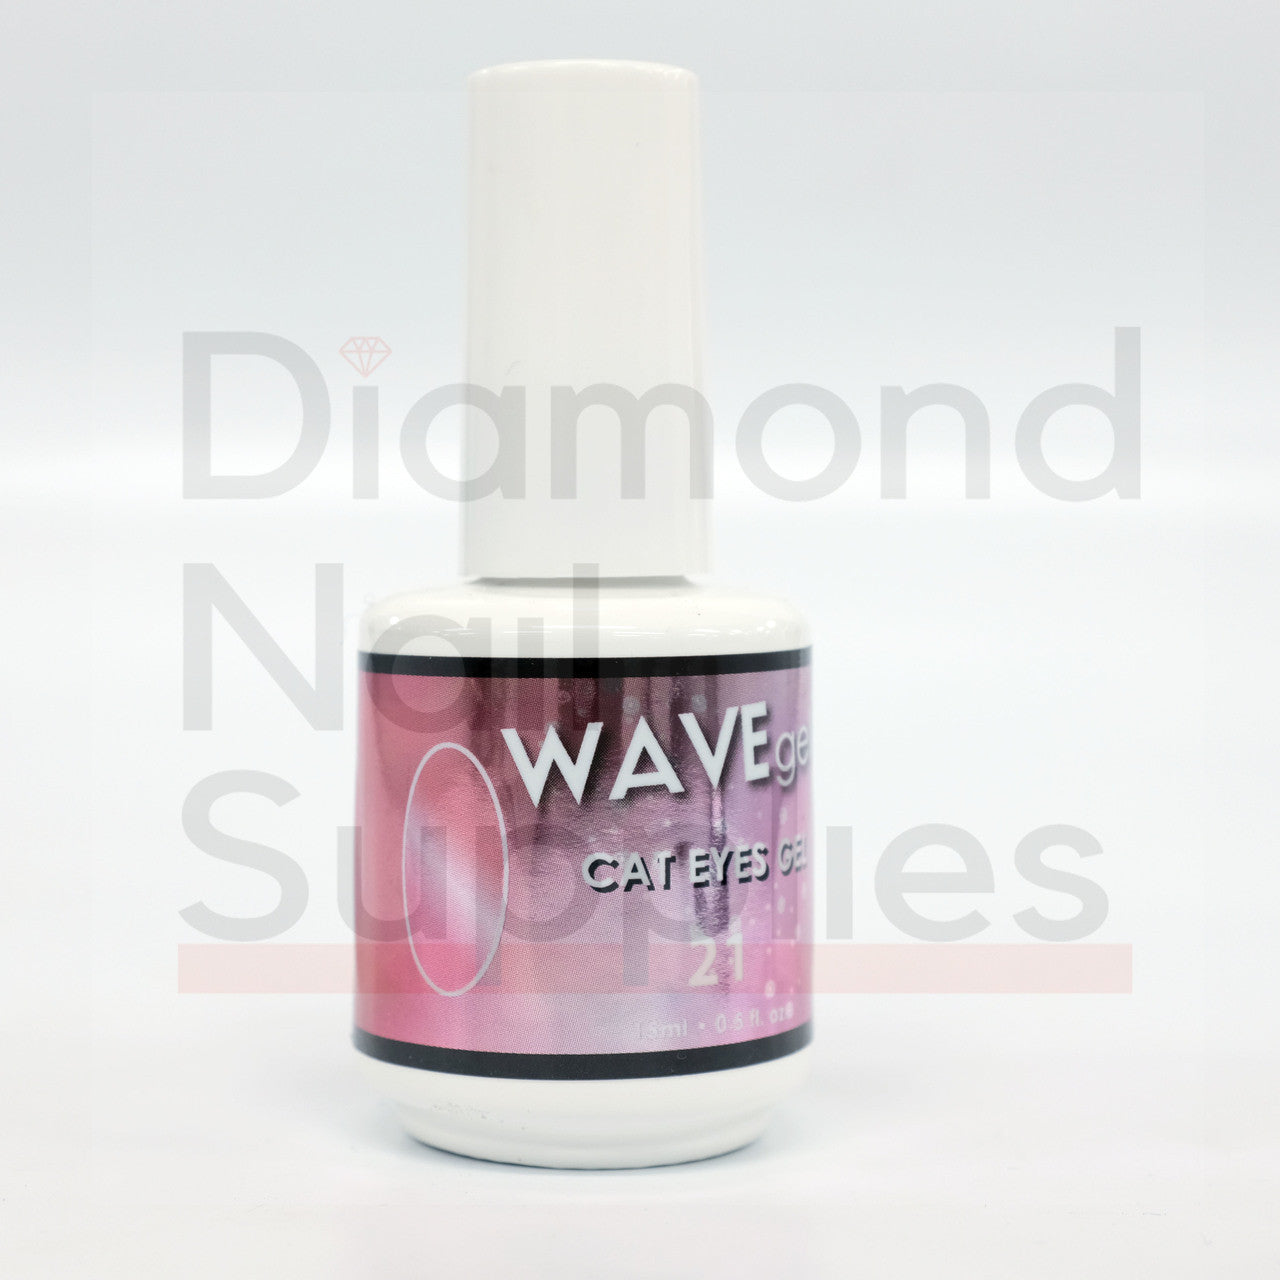 Cat Eyes Gel - 21 Diamond Nail Supplies